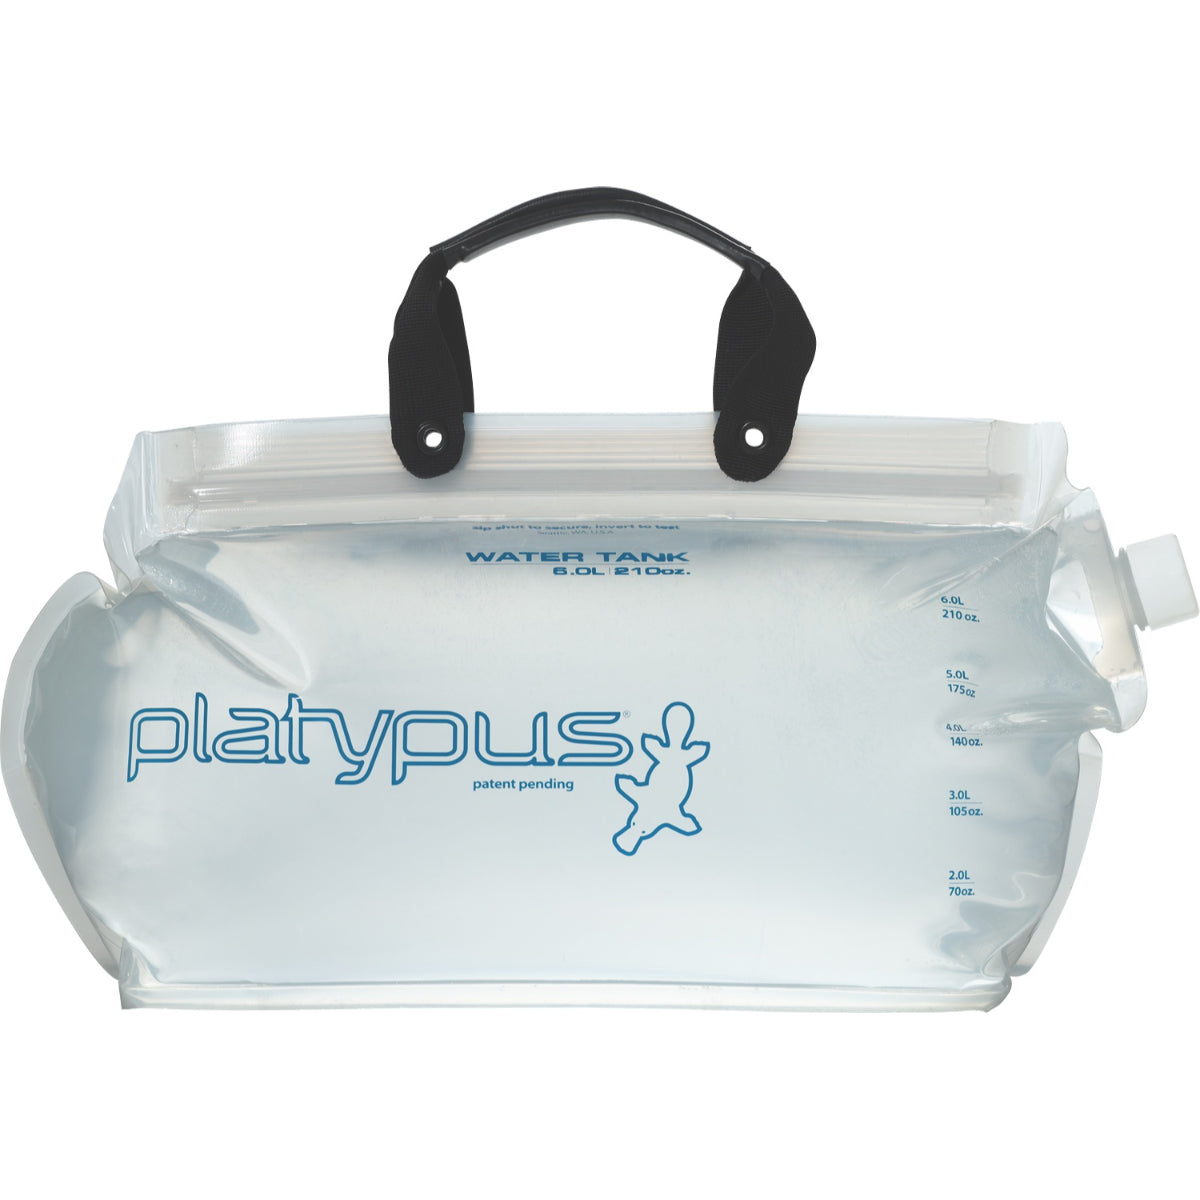 Platypus Water Tanks